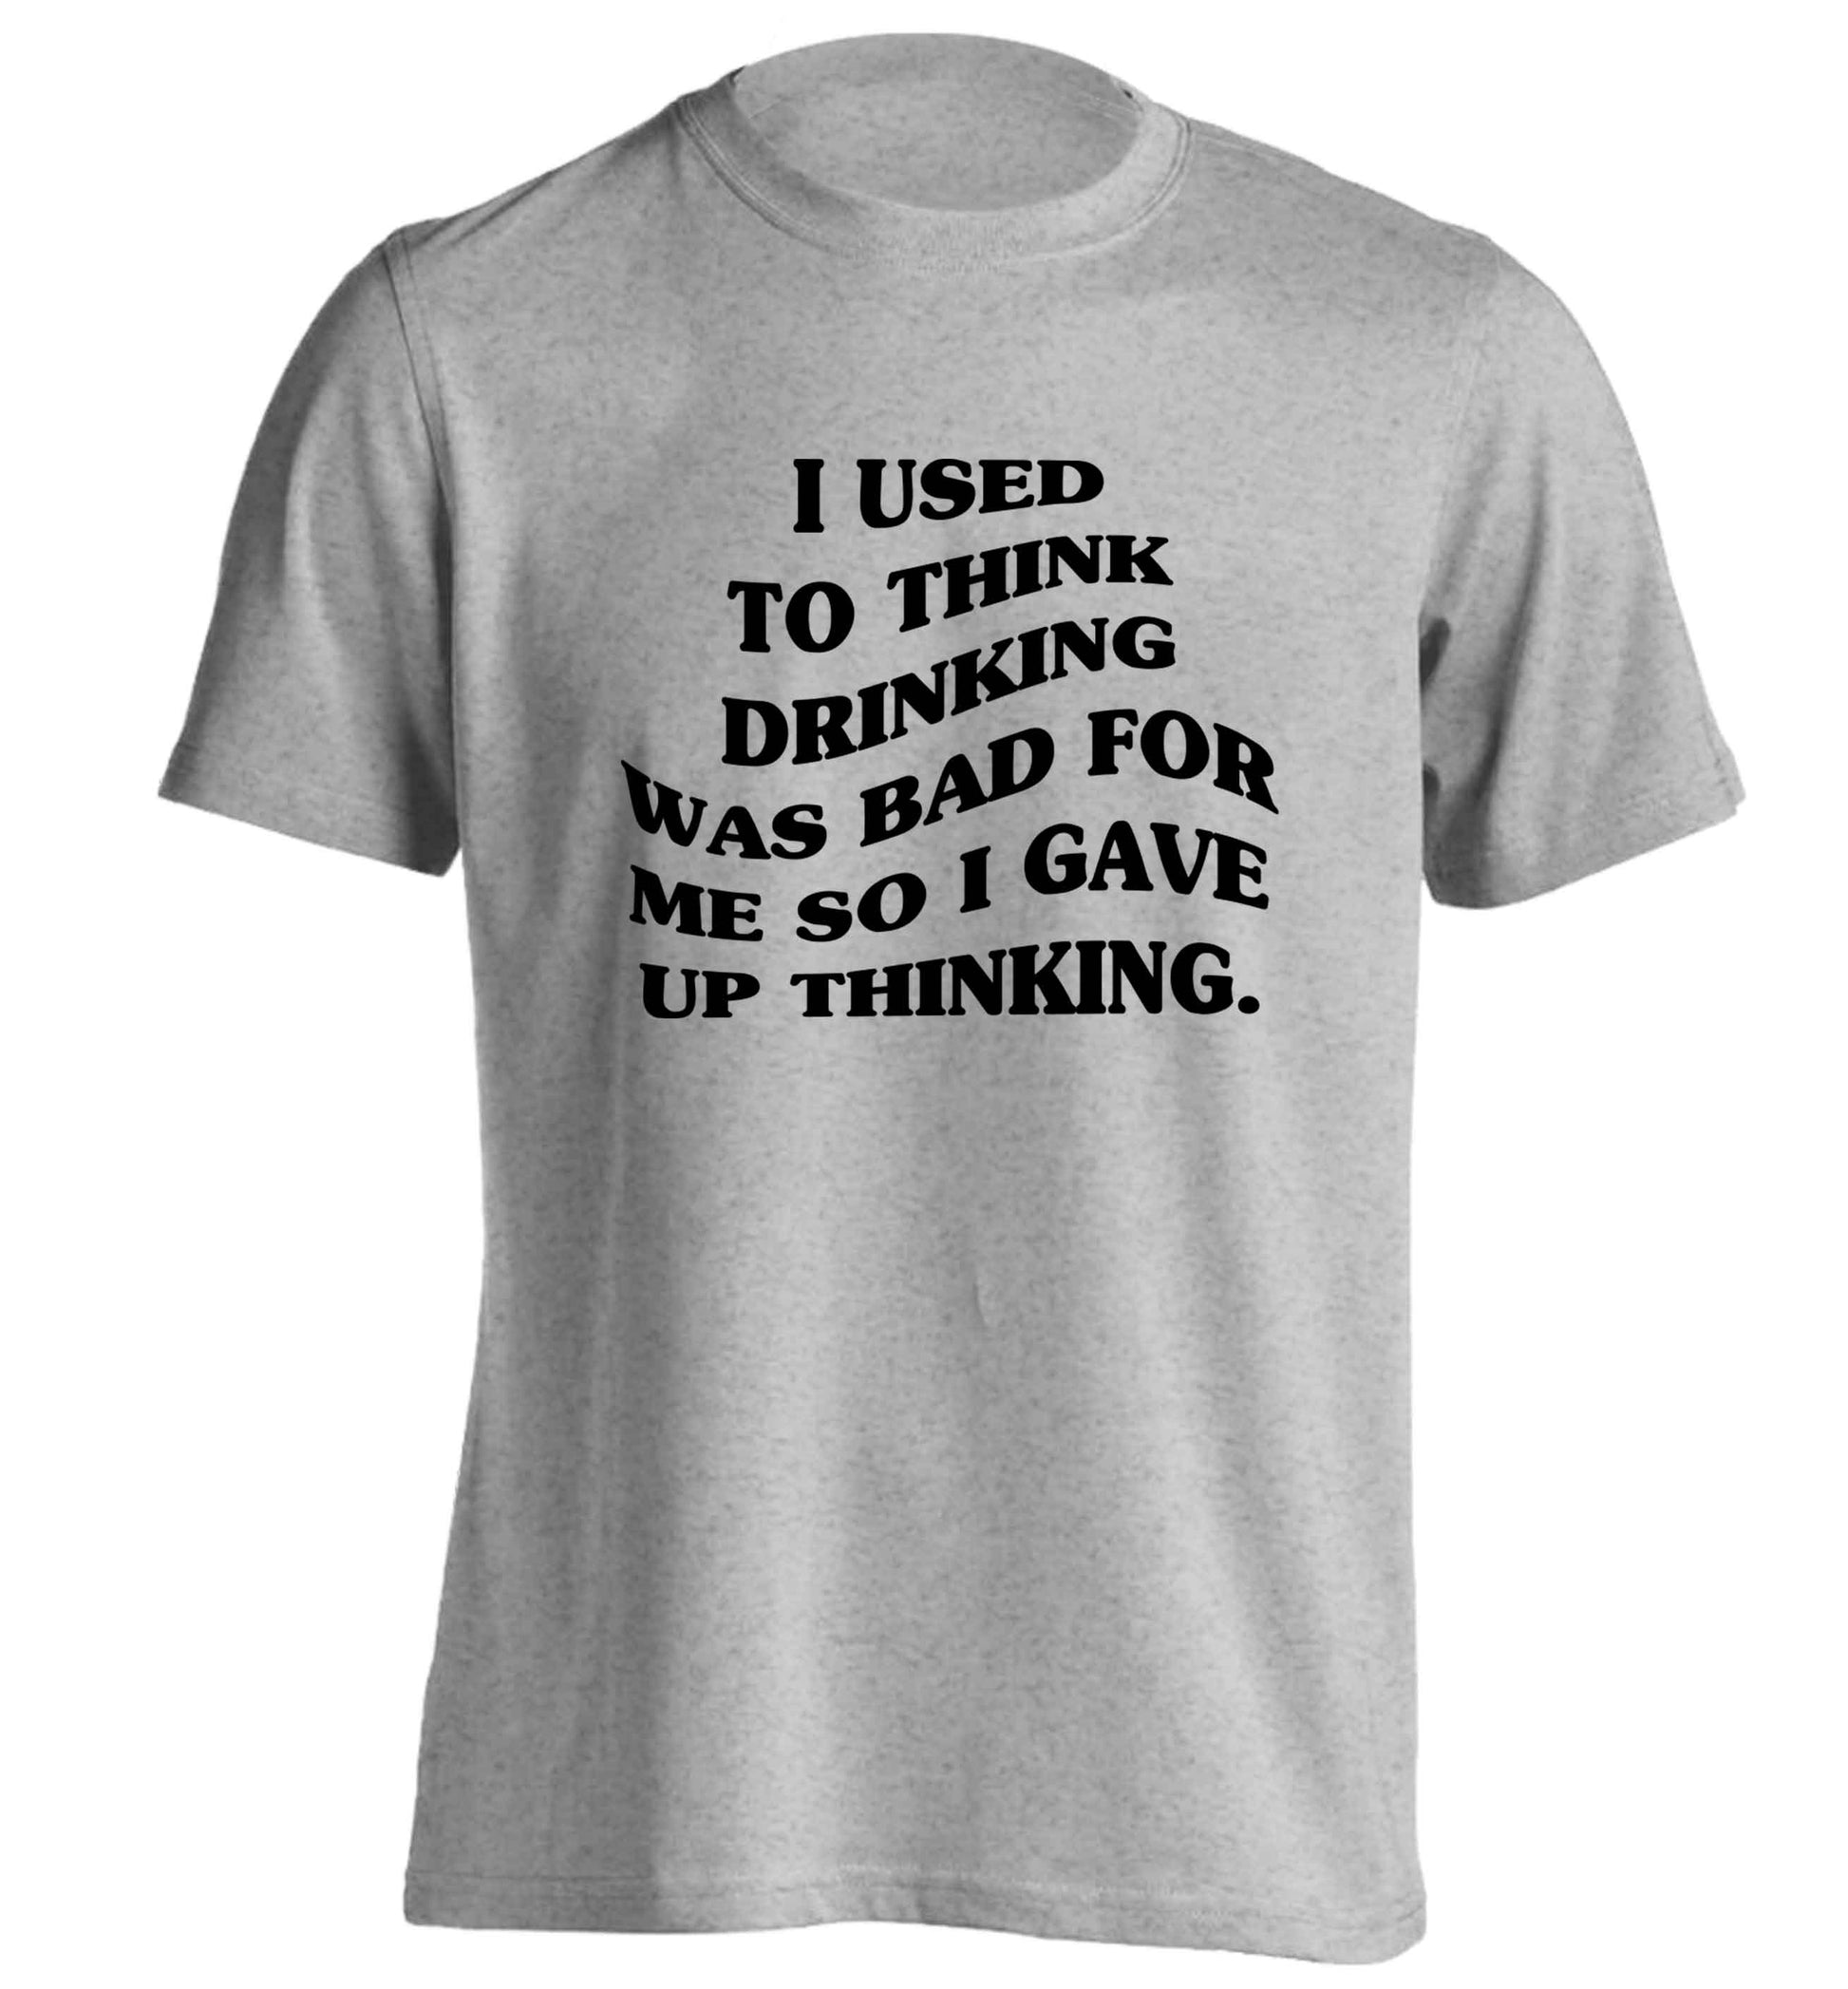 I used to think drinking was bad so I gave up thinking adults unisex grey Tshirt 2XL